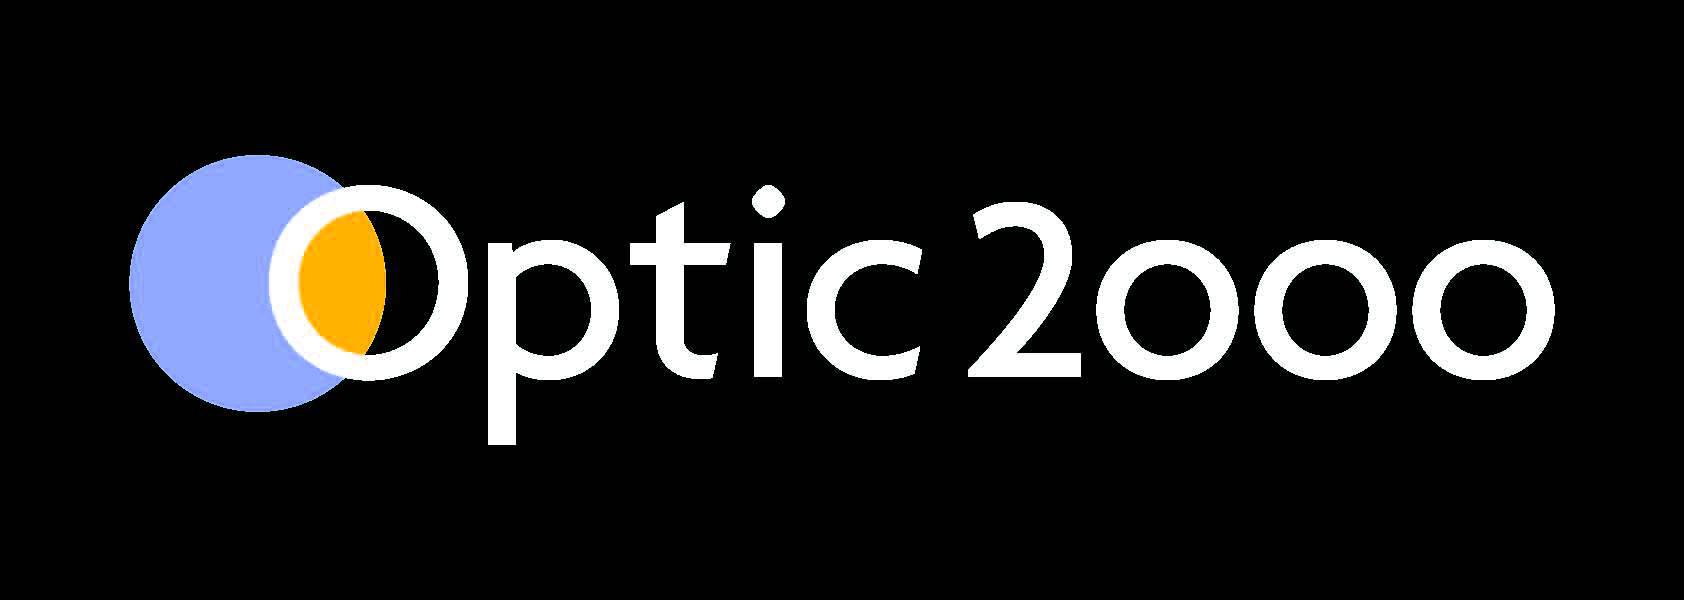 logo-optic-2000-quadri.png